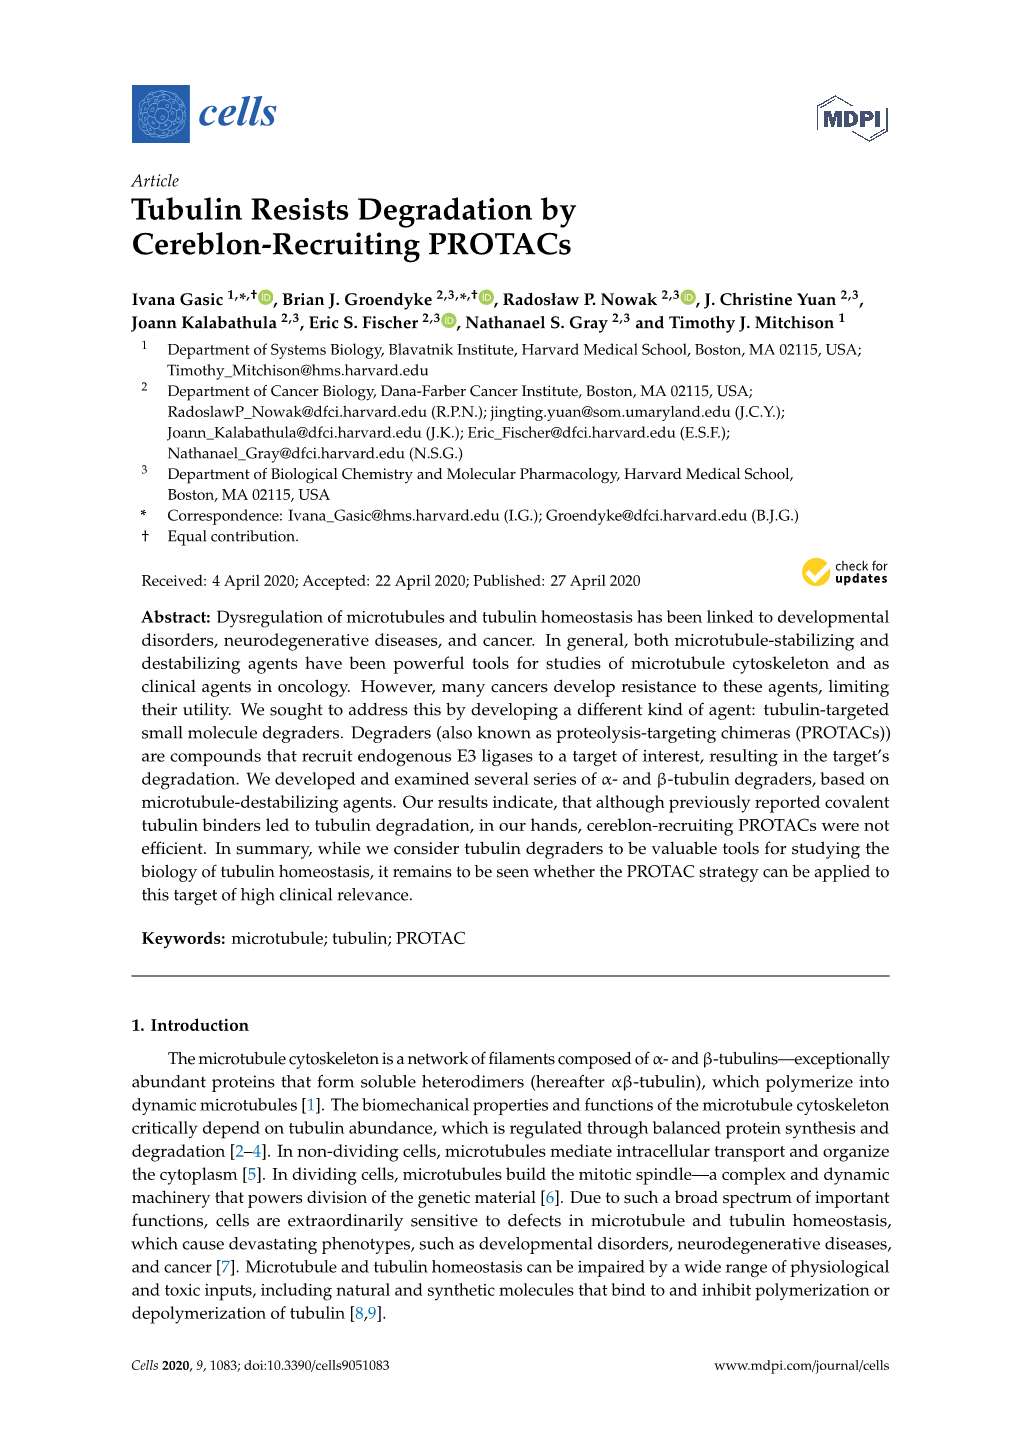 Tubulin Resists Degradation by Cereblon-Recruiting Protacs